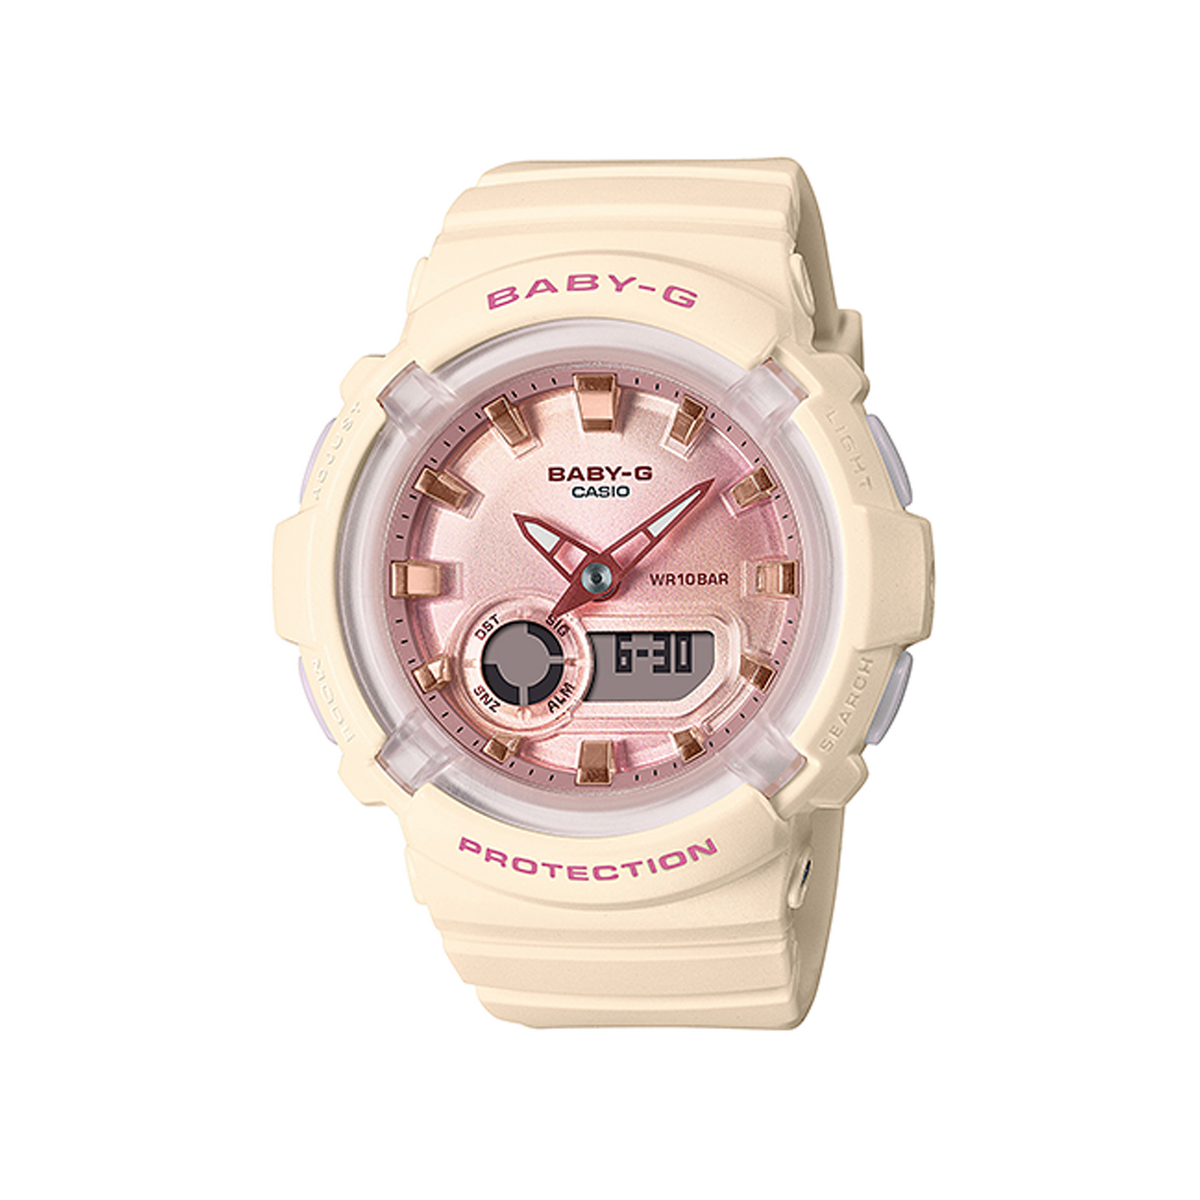 Casio Baby-G Women's Analogue Digital Watch BGA280-4A2